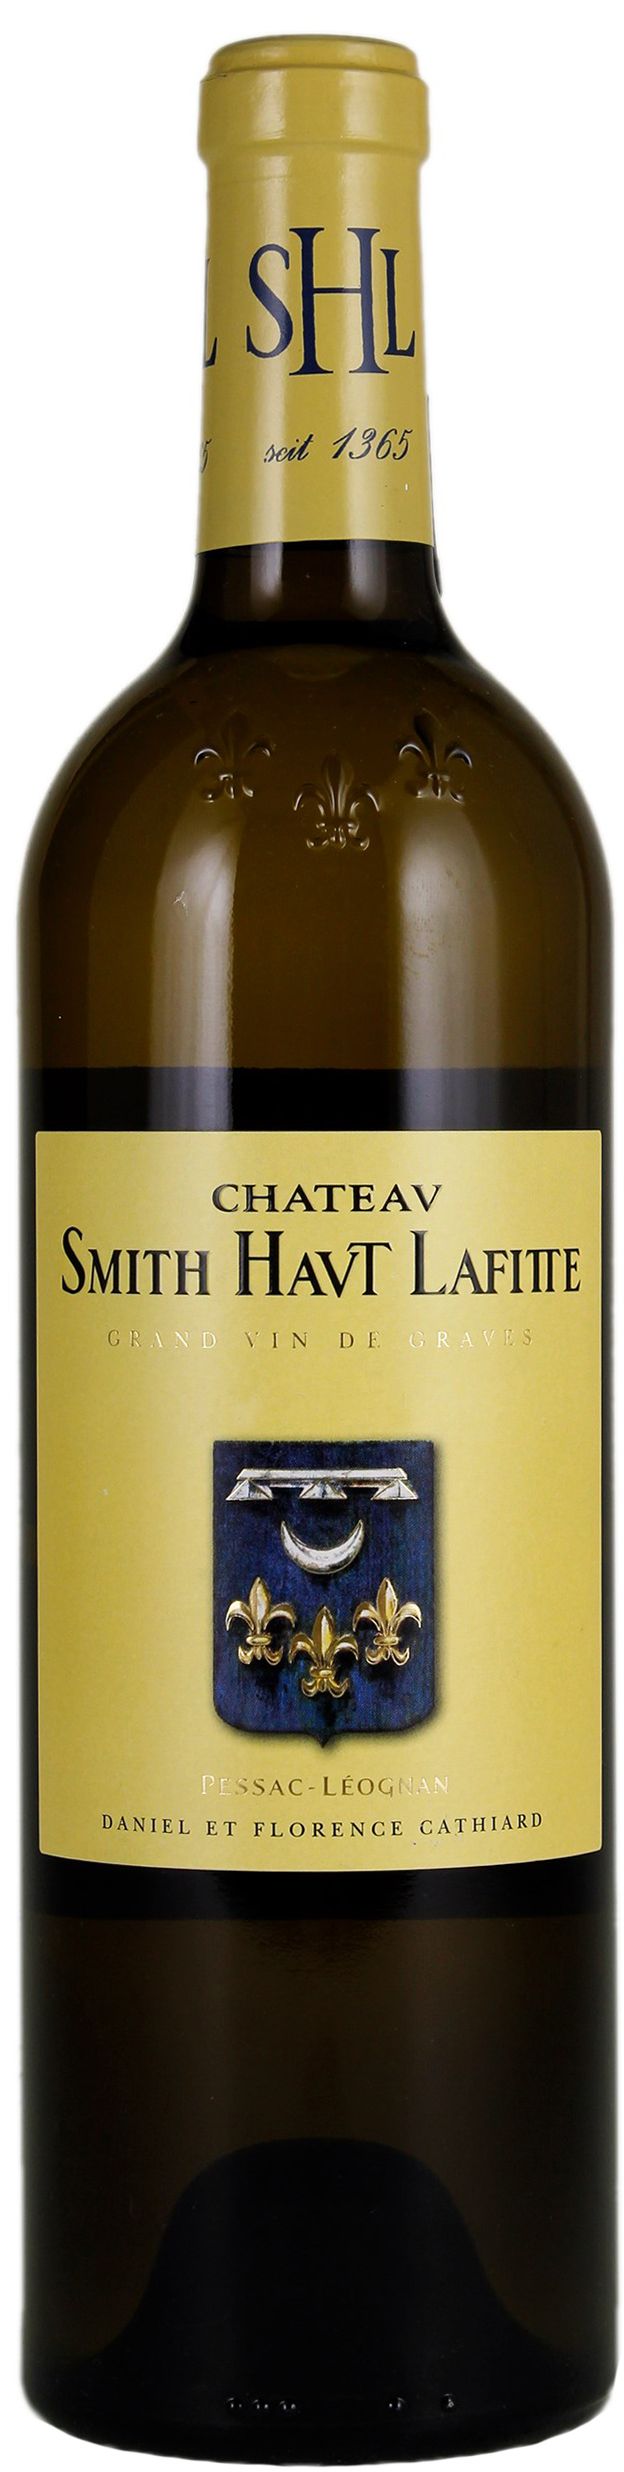 Chateau Smith Haut Lafitte, Blanc, 2013